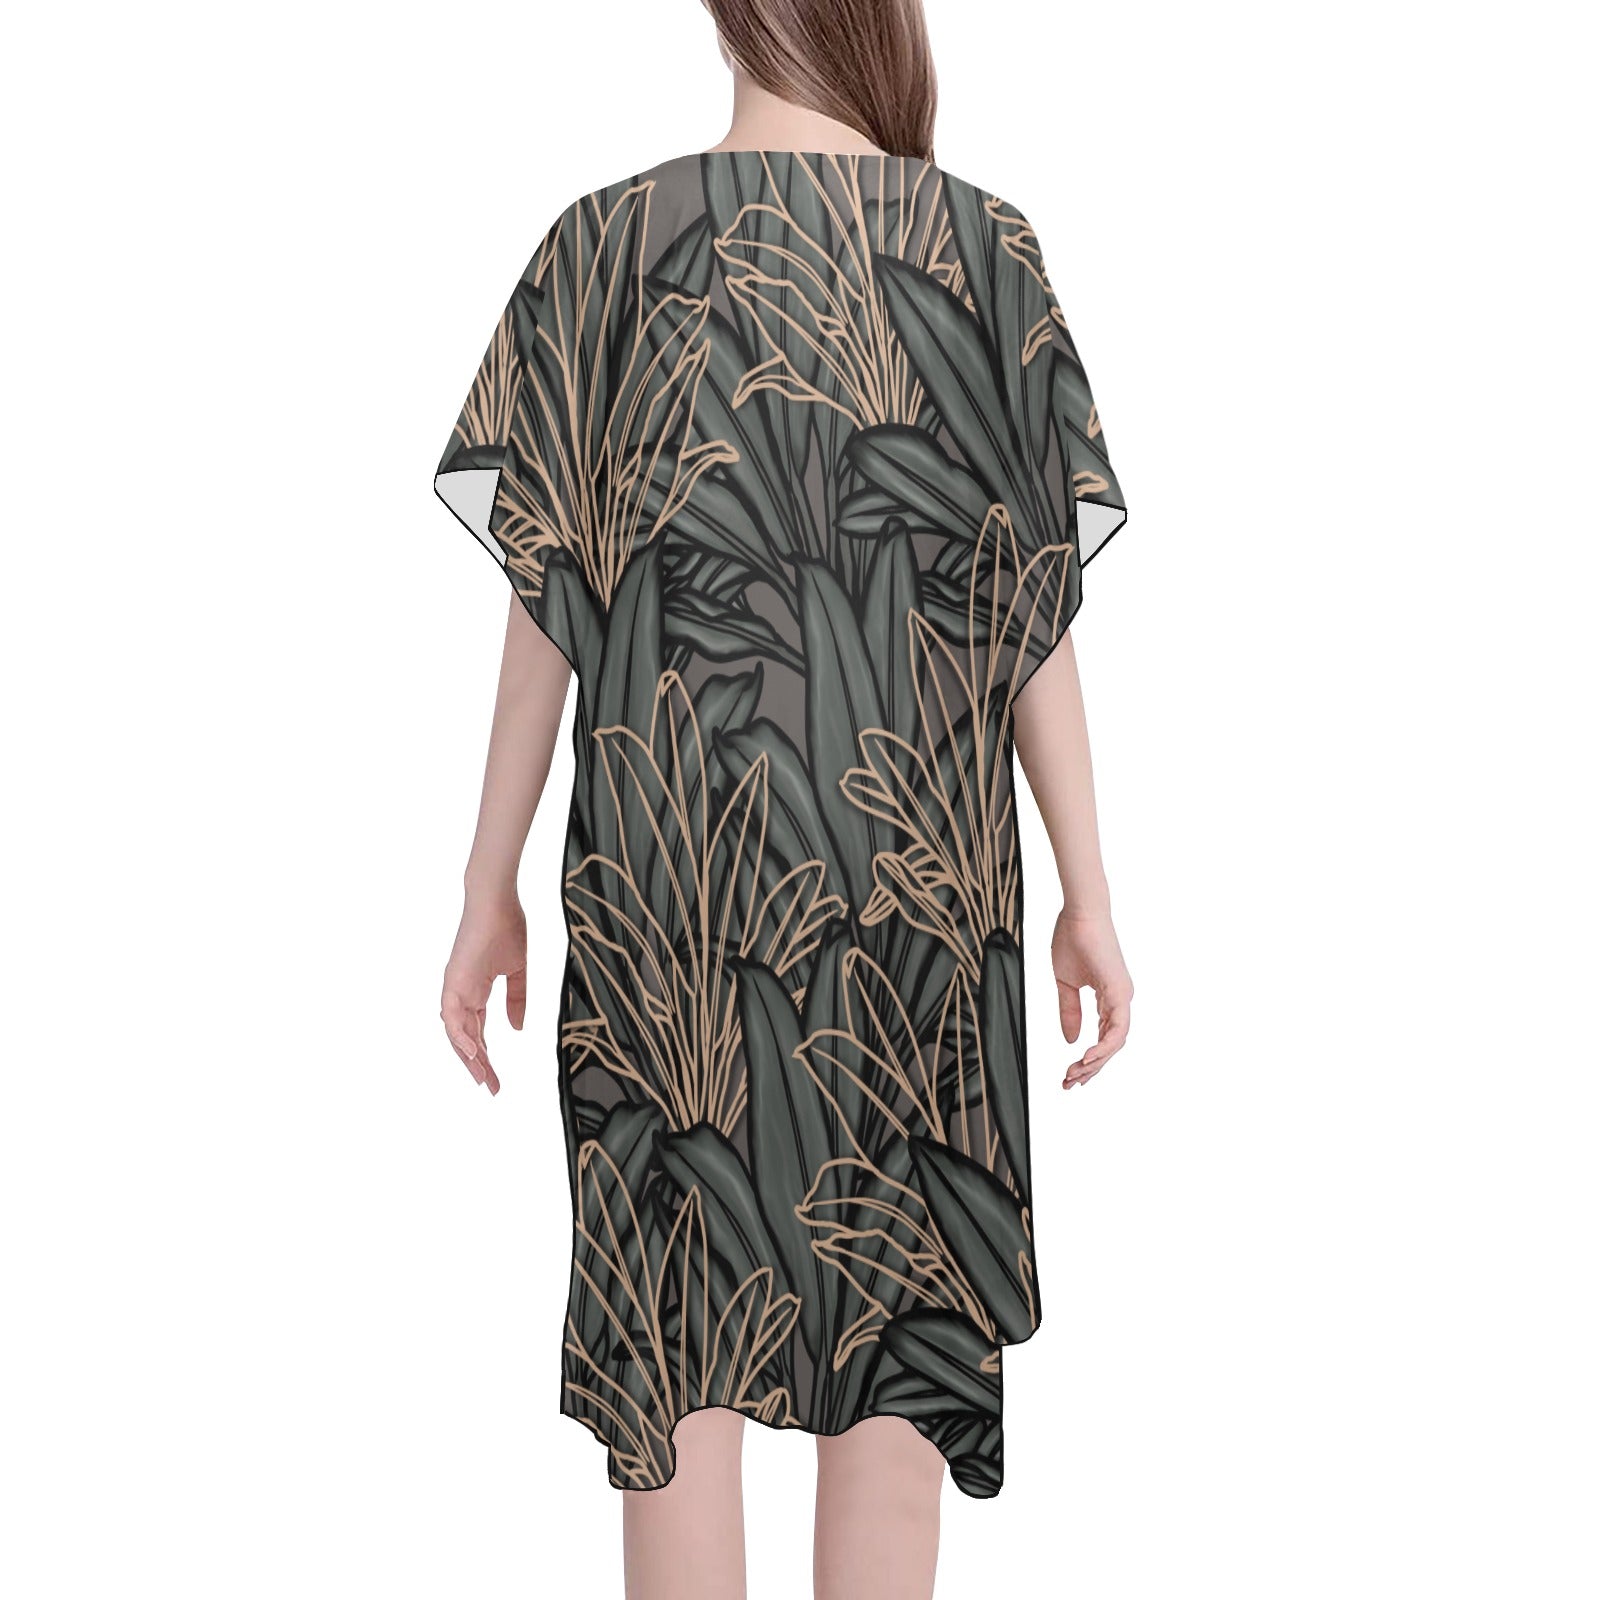 La'i Design Mid Length Side Slit Kimono Coverup Mid-Length Side Slits Chiffon Cover Up